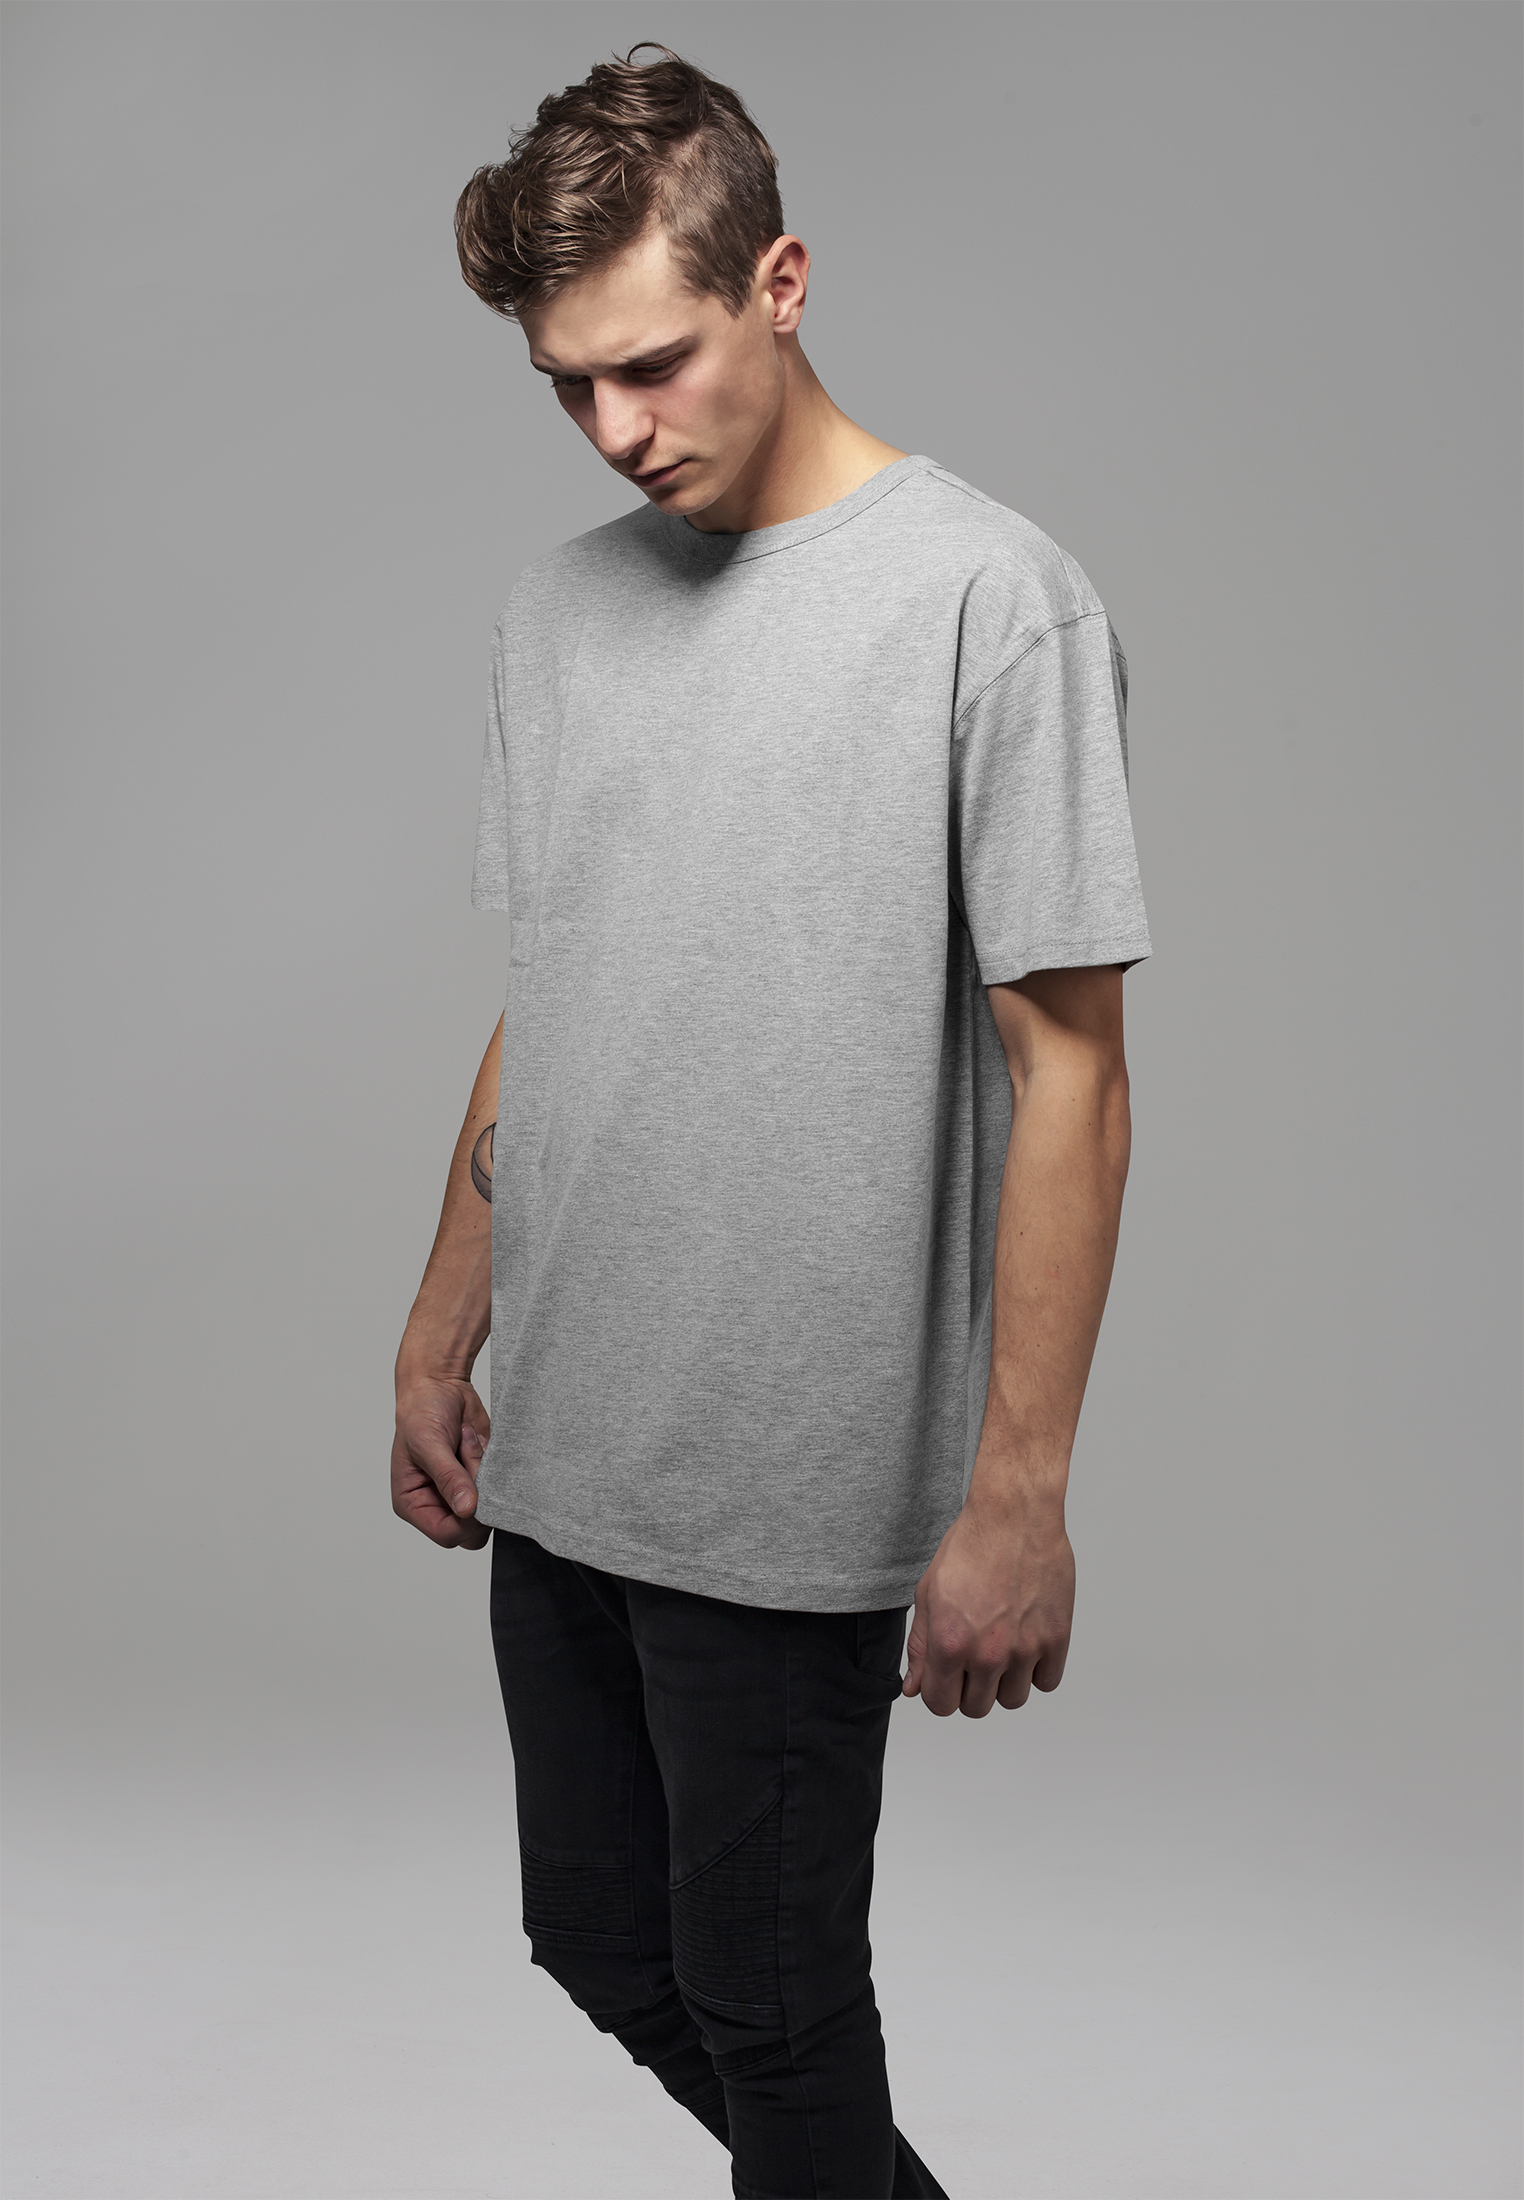 Fit M oversize L | Oversized Classics Urban Shirt S extra Big groß eBay Herren T-Shirt